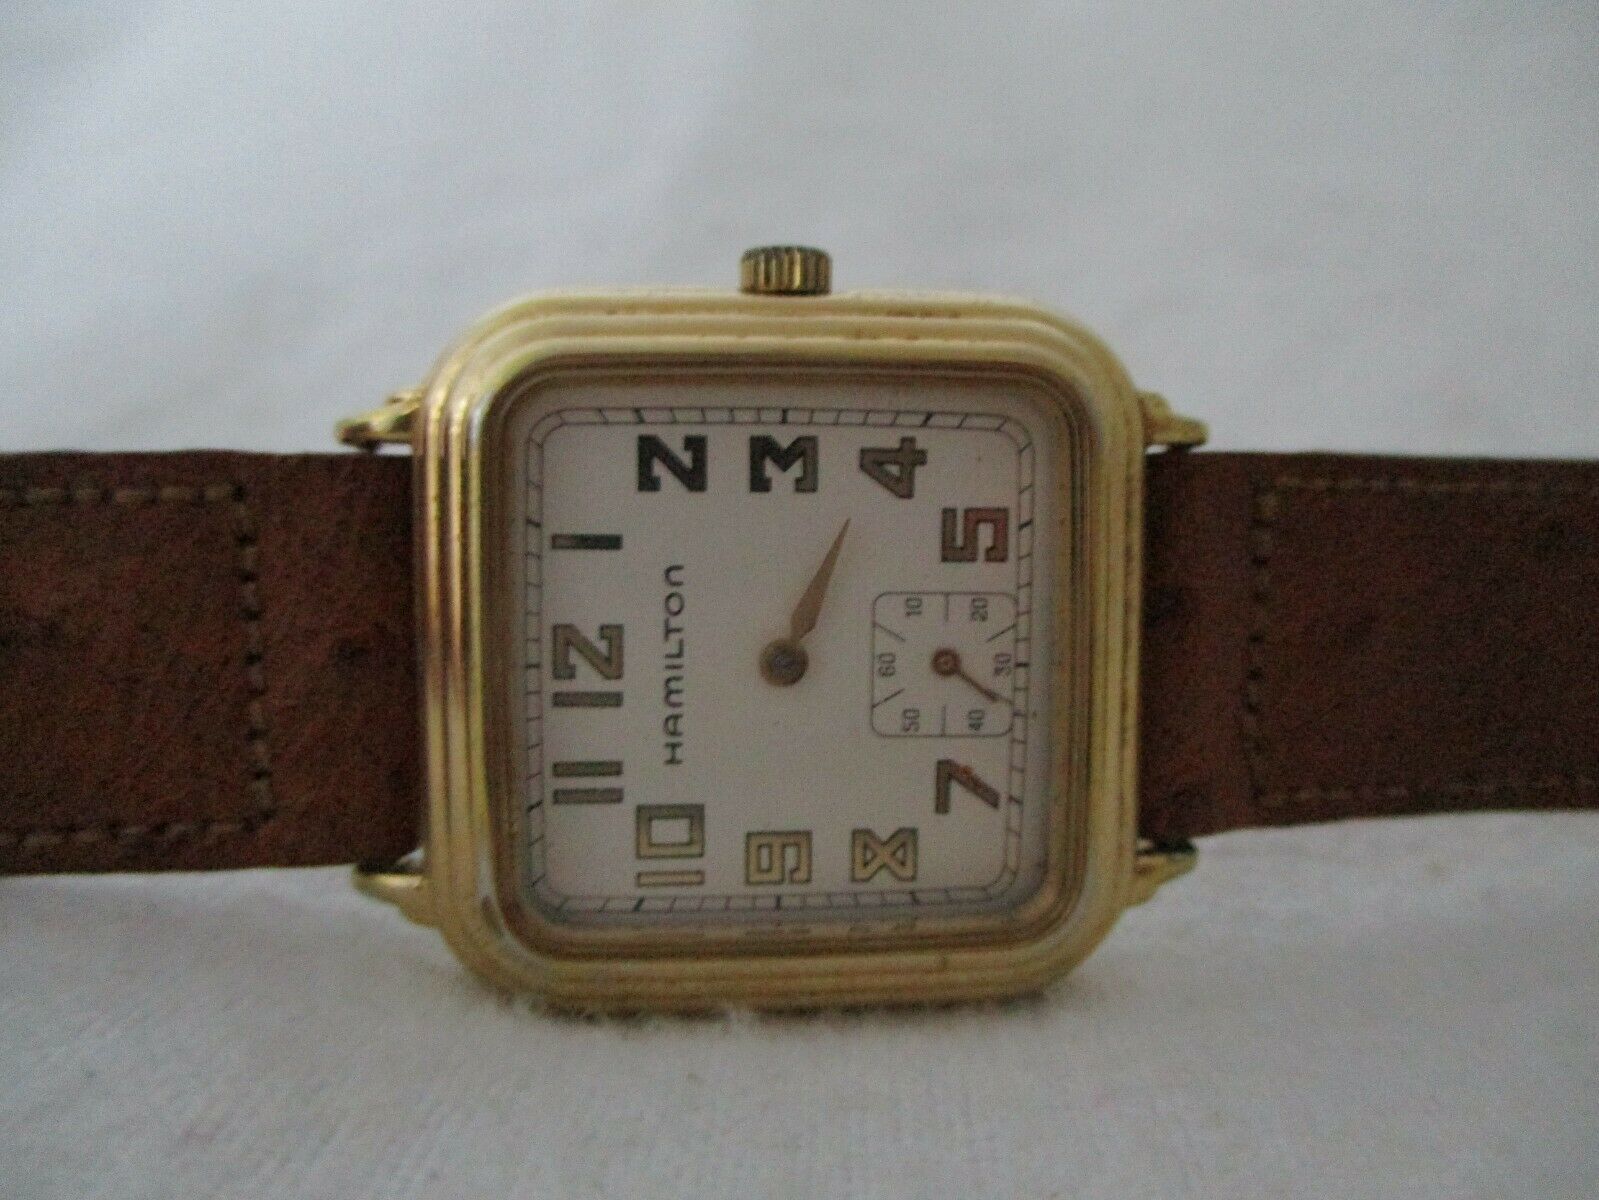 Hamilton Analog Wristwatch with a Buckle Band - $325.00